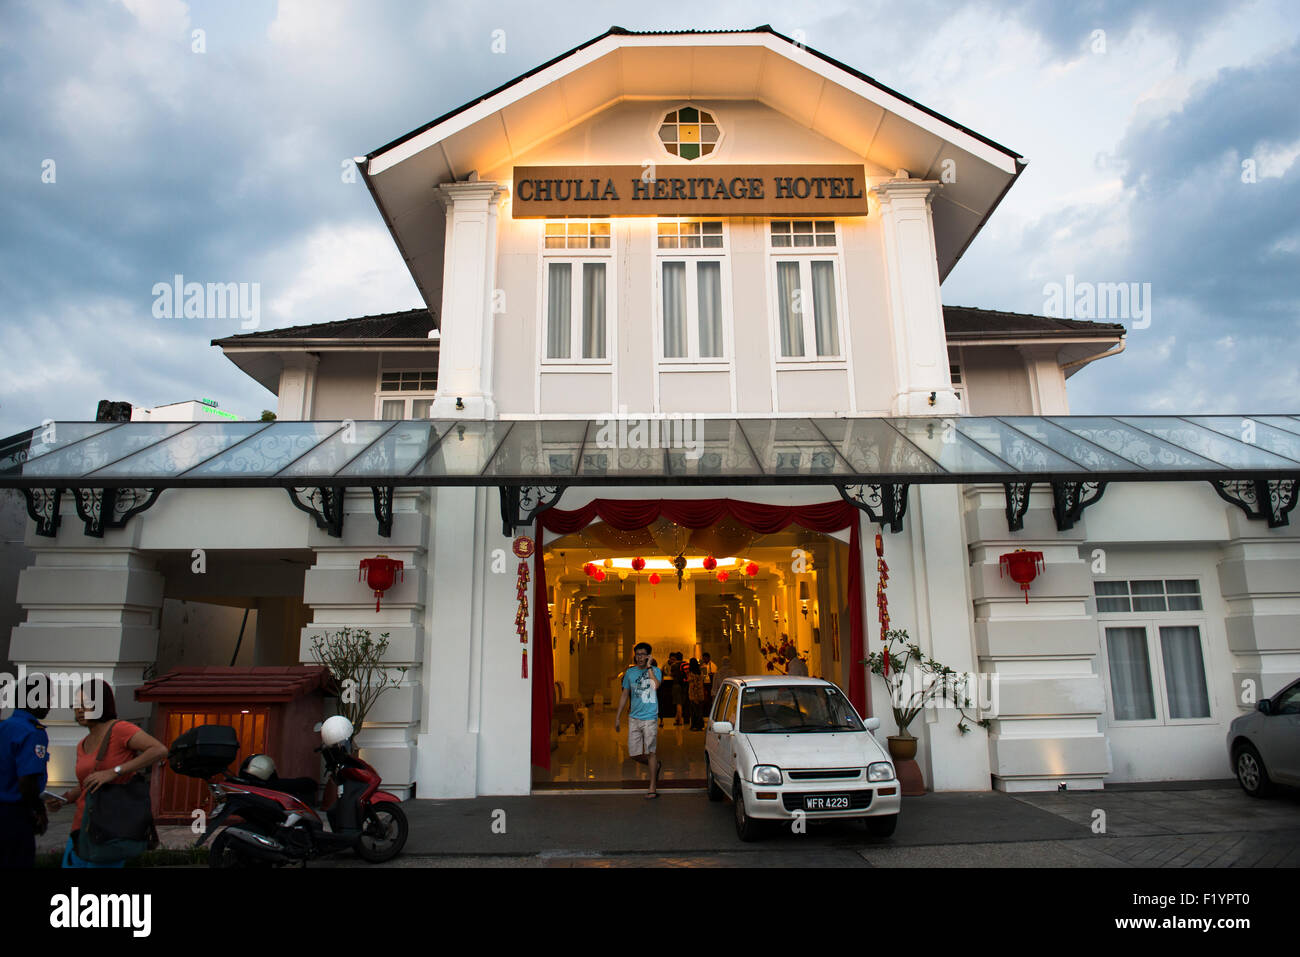 Chulia Heritage Hotel In Georgetown Penang Stock Photo - 